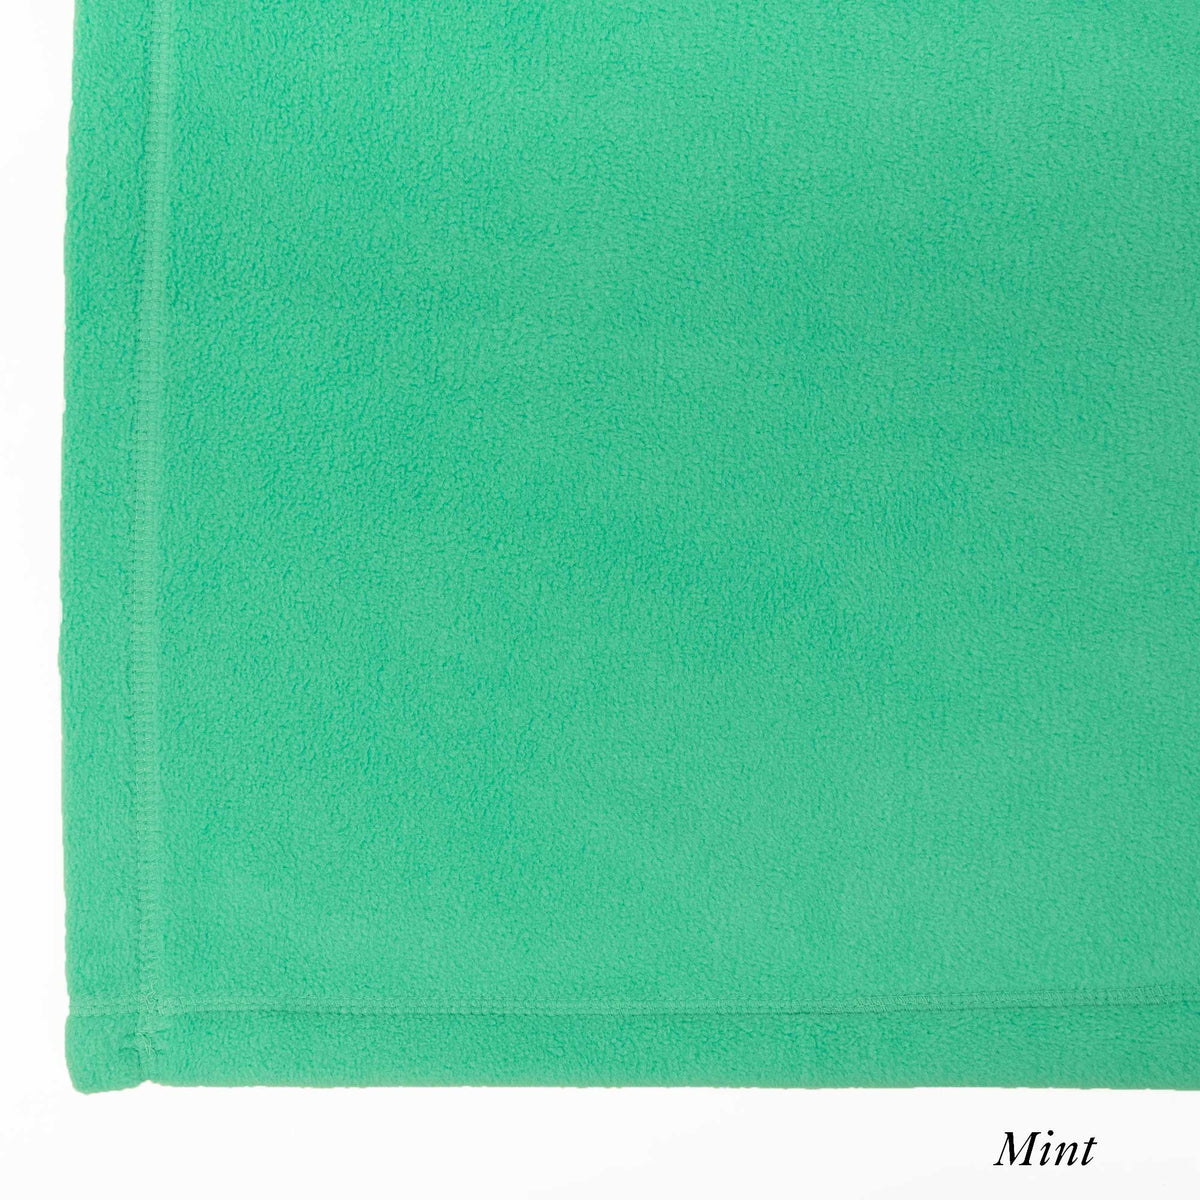 Mint - Peaceful Touch - The Best Fleece Blankets - Custom Size Peaceful Touch Fleece Blankets - American Blanket Company